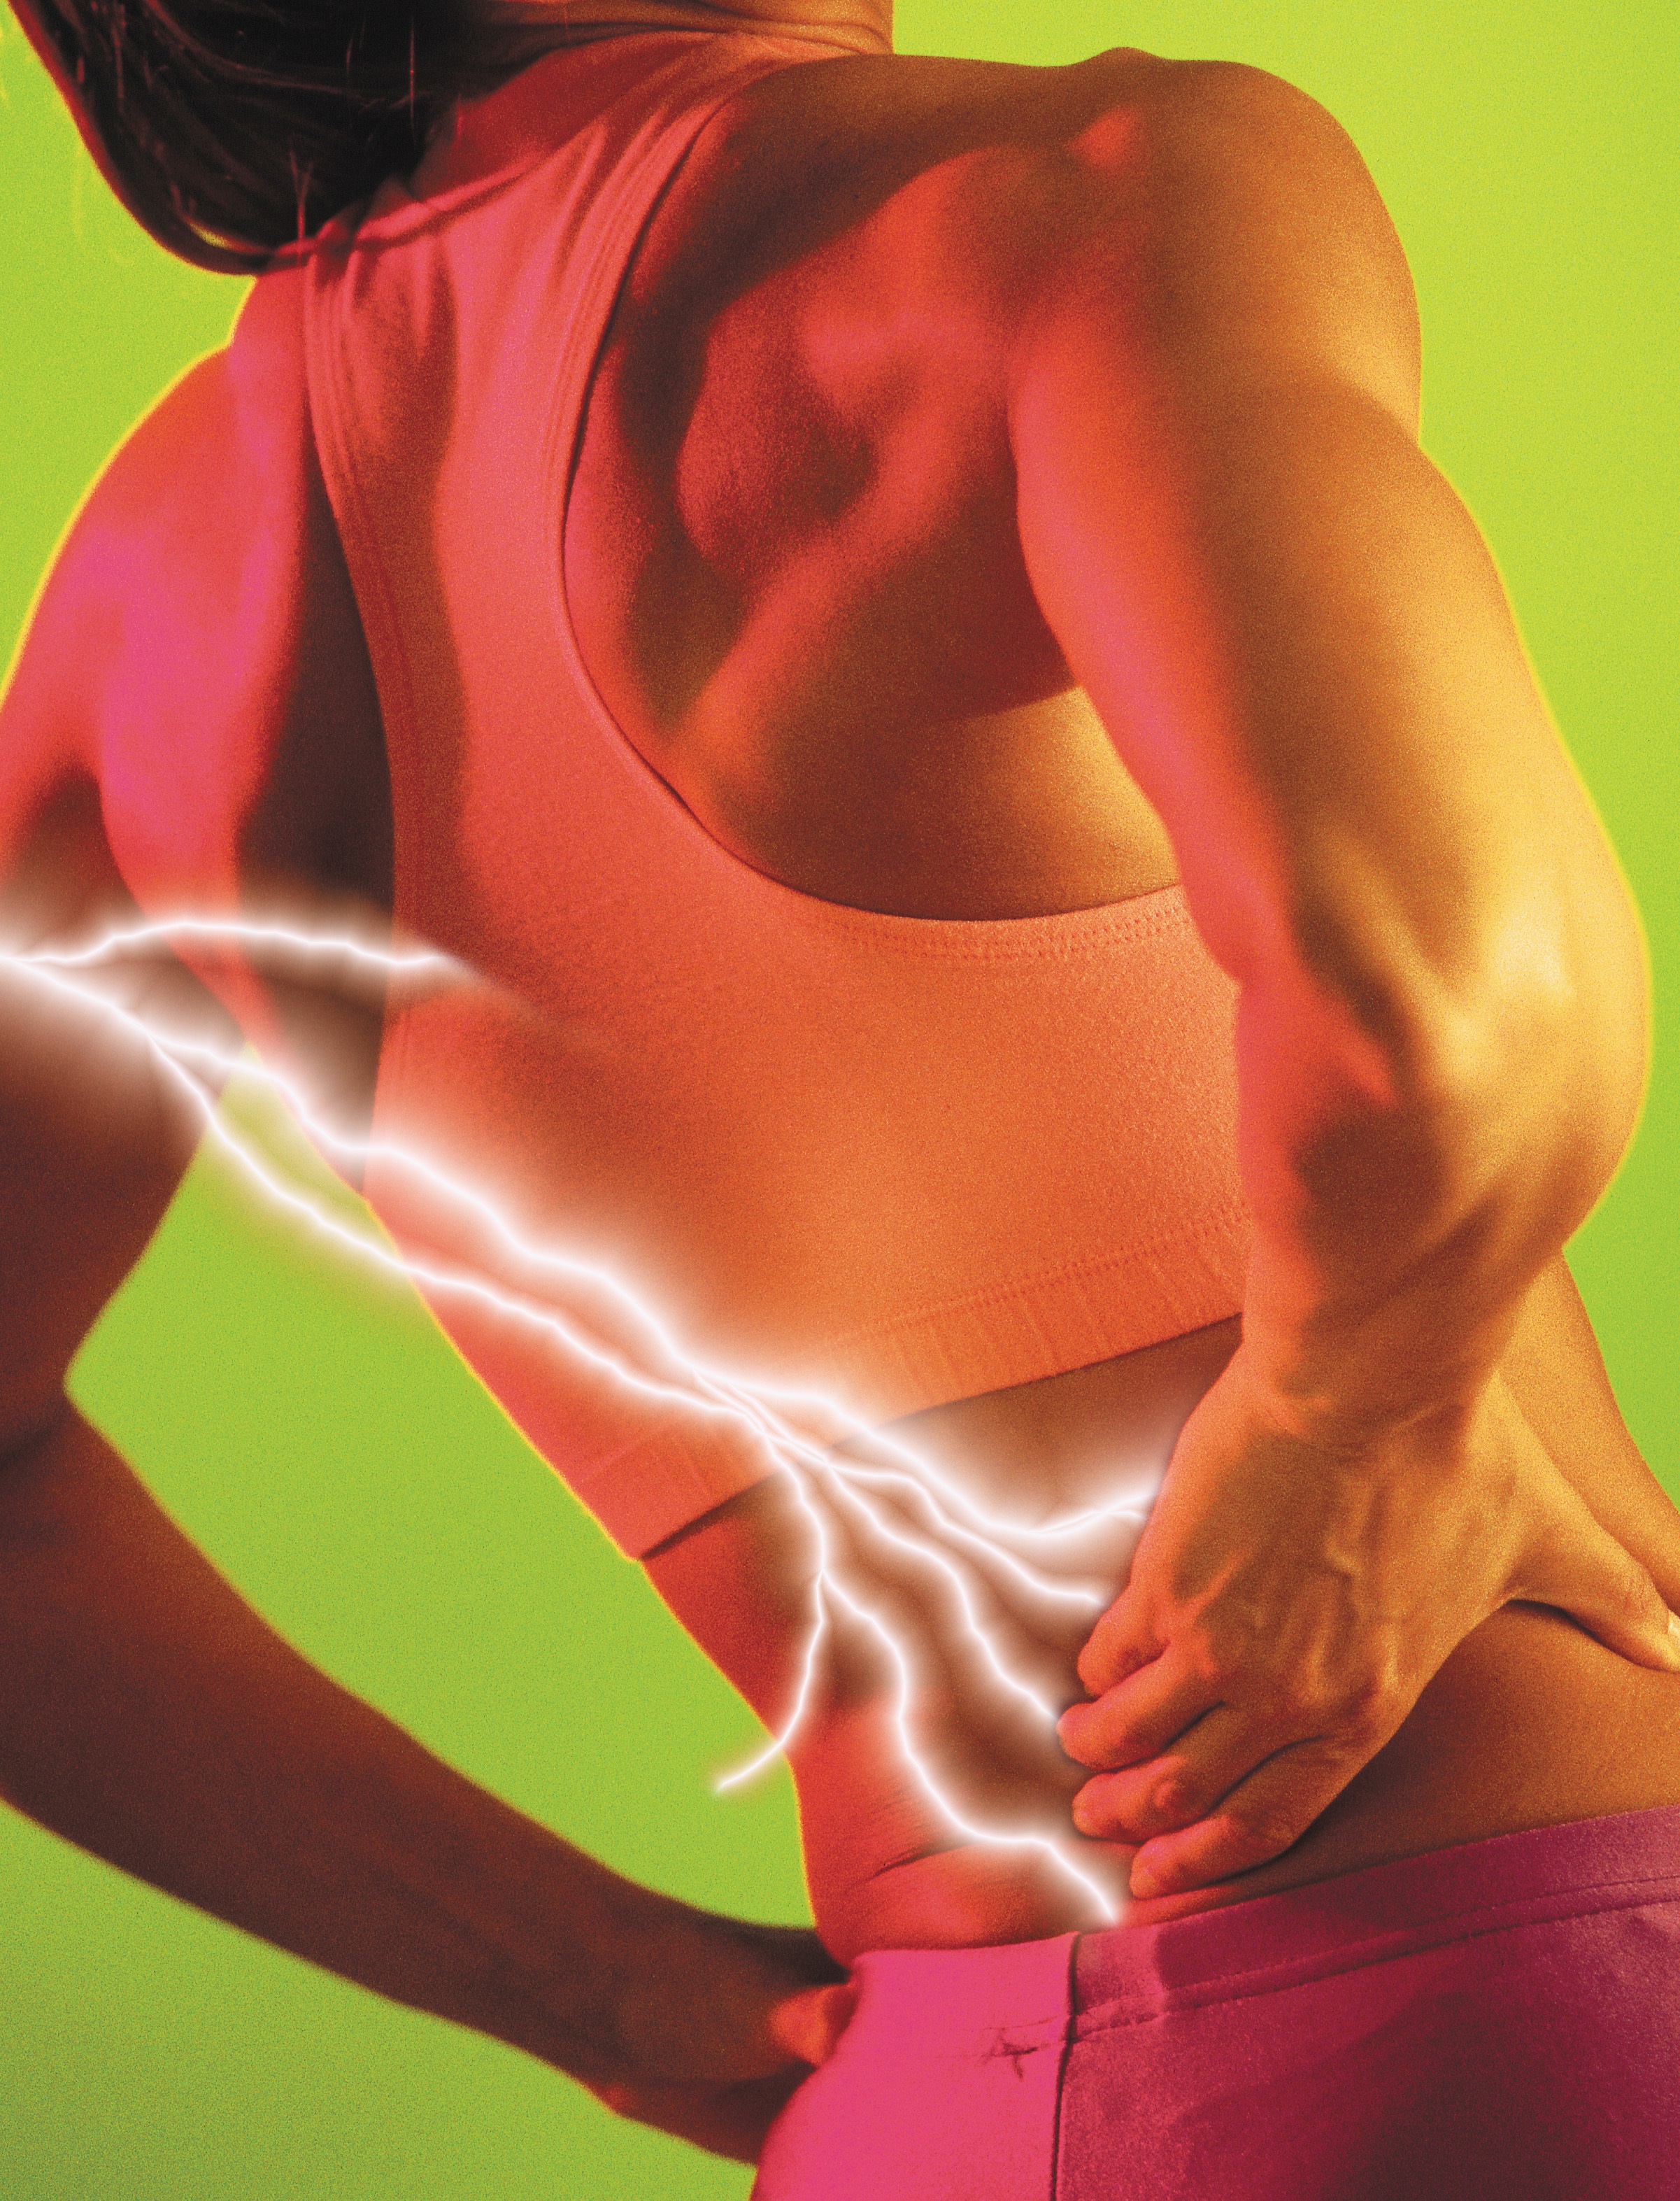 lightning bolk superimposed over a person's torso